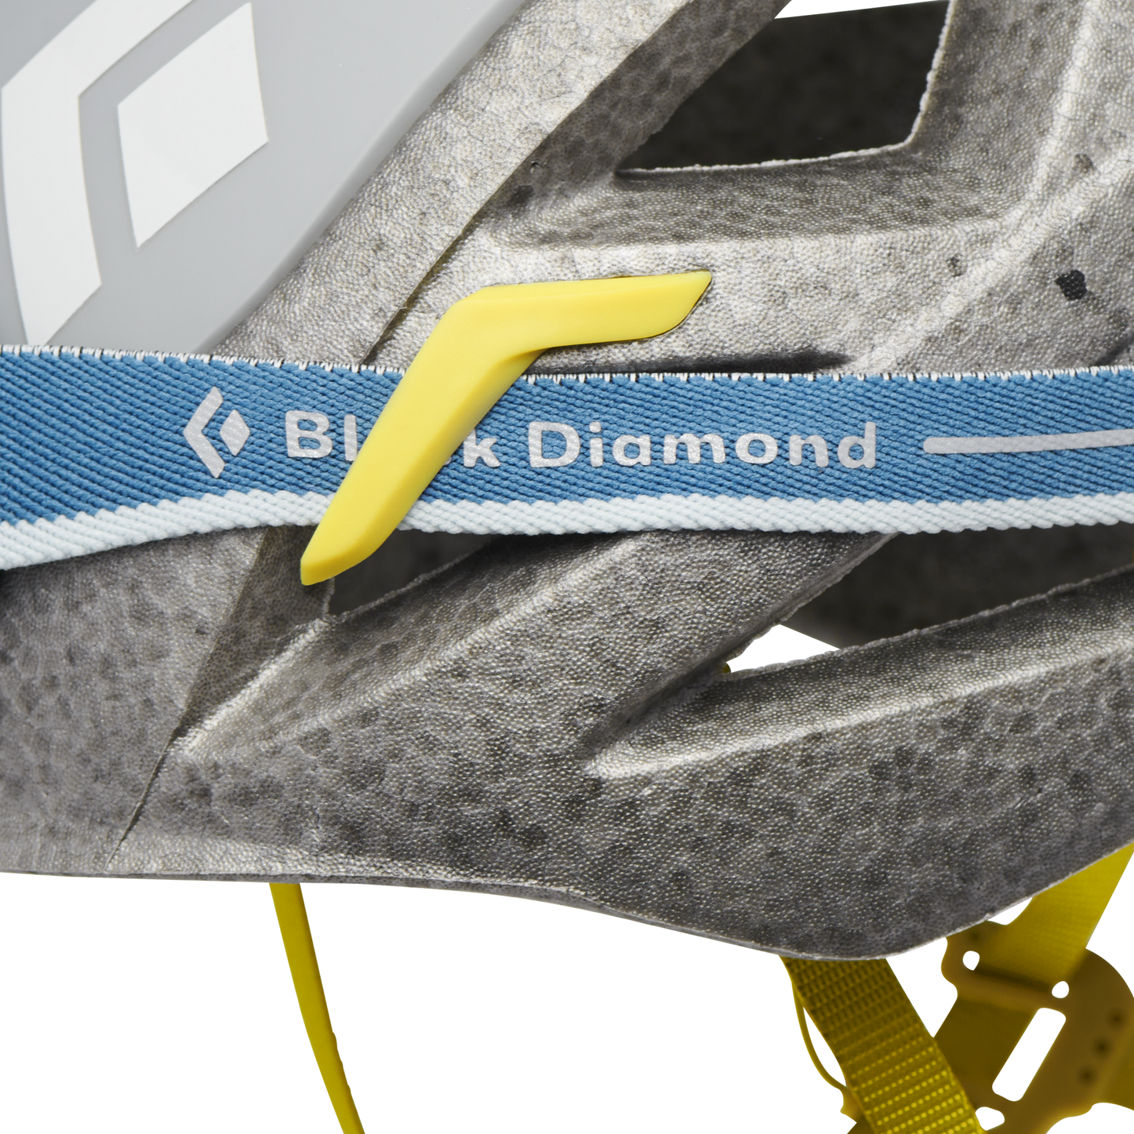 Black Diamond Equipment Vapor Helmet - Image 6 of 7